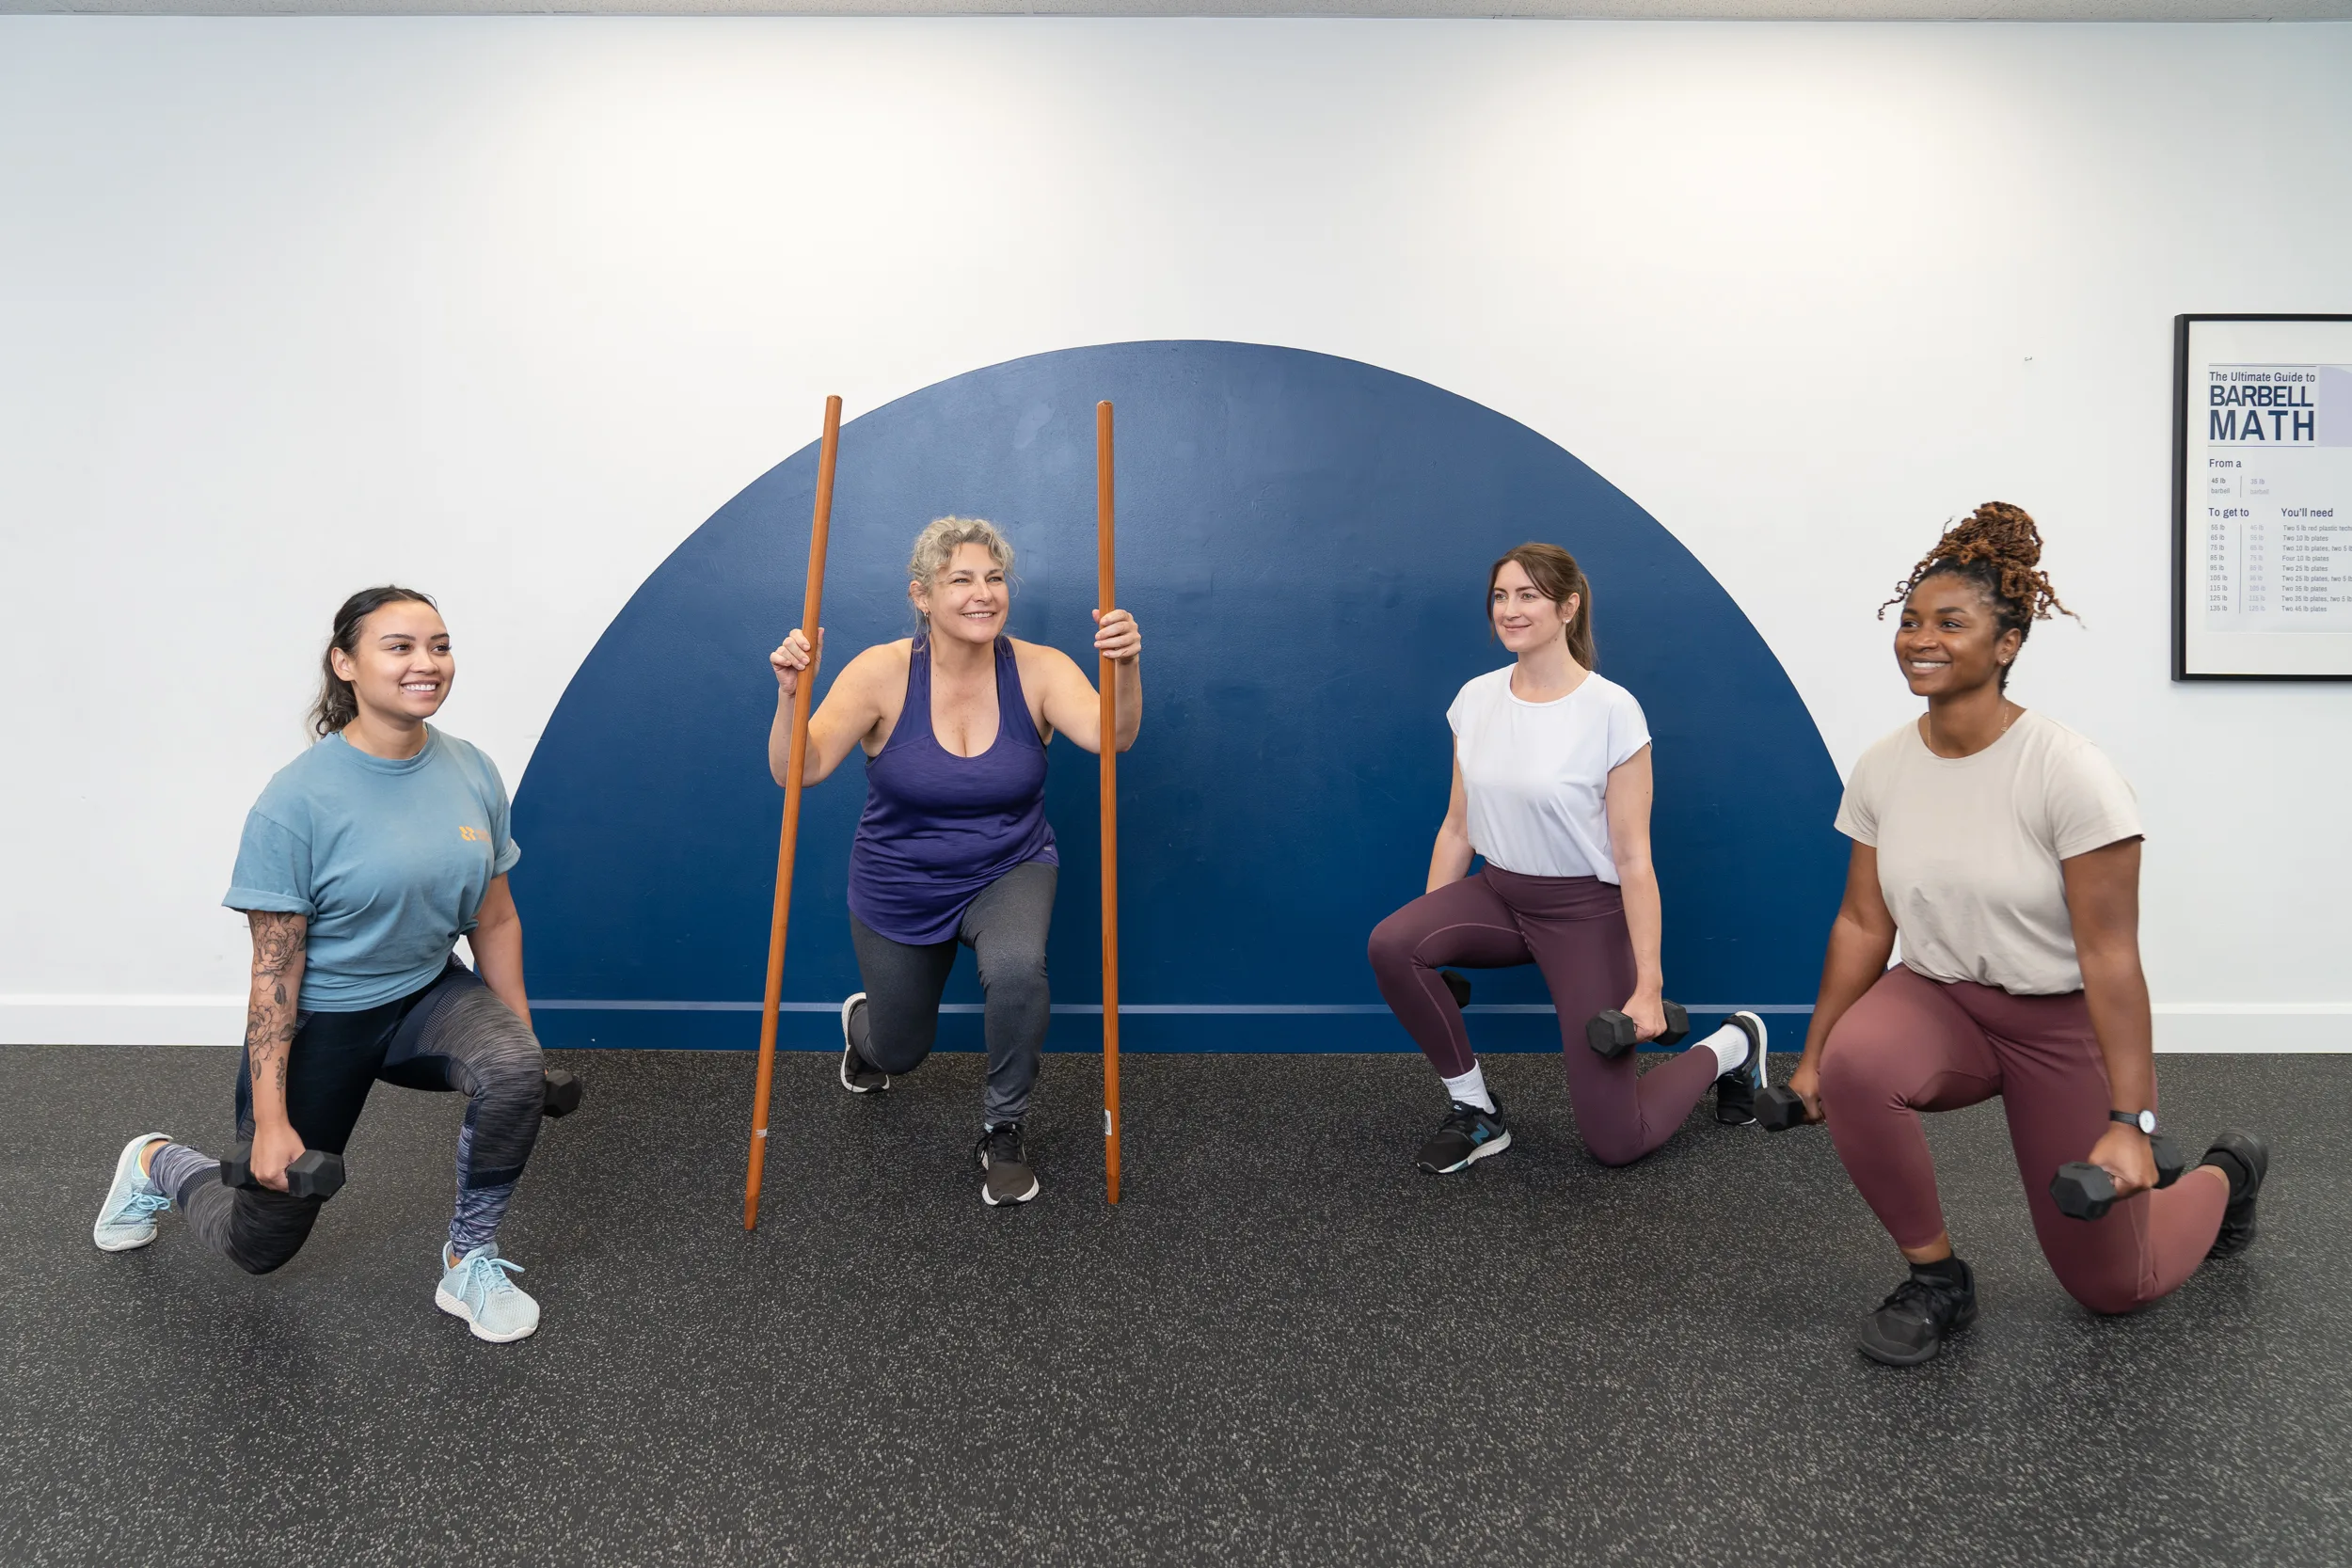 Group fitness class - split squat. Four women performing a split squat smilling.